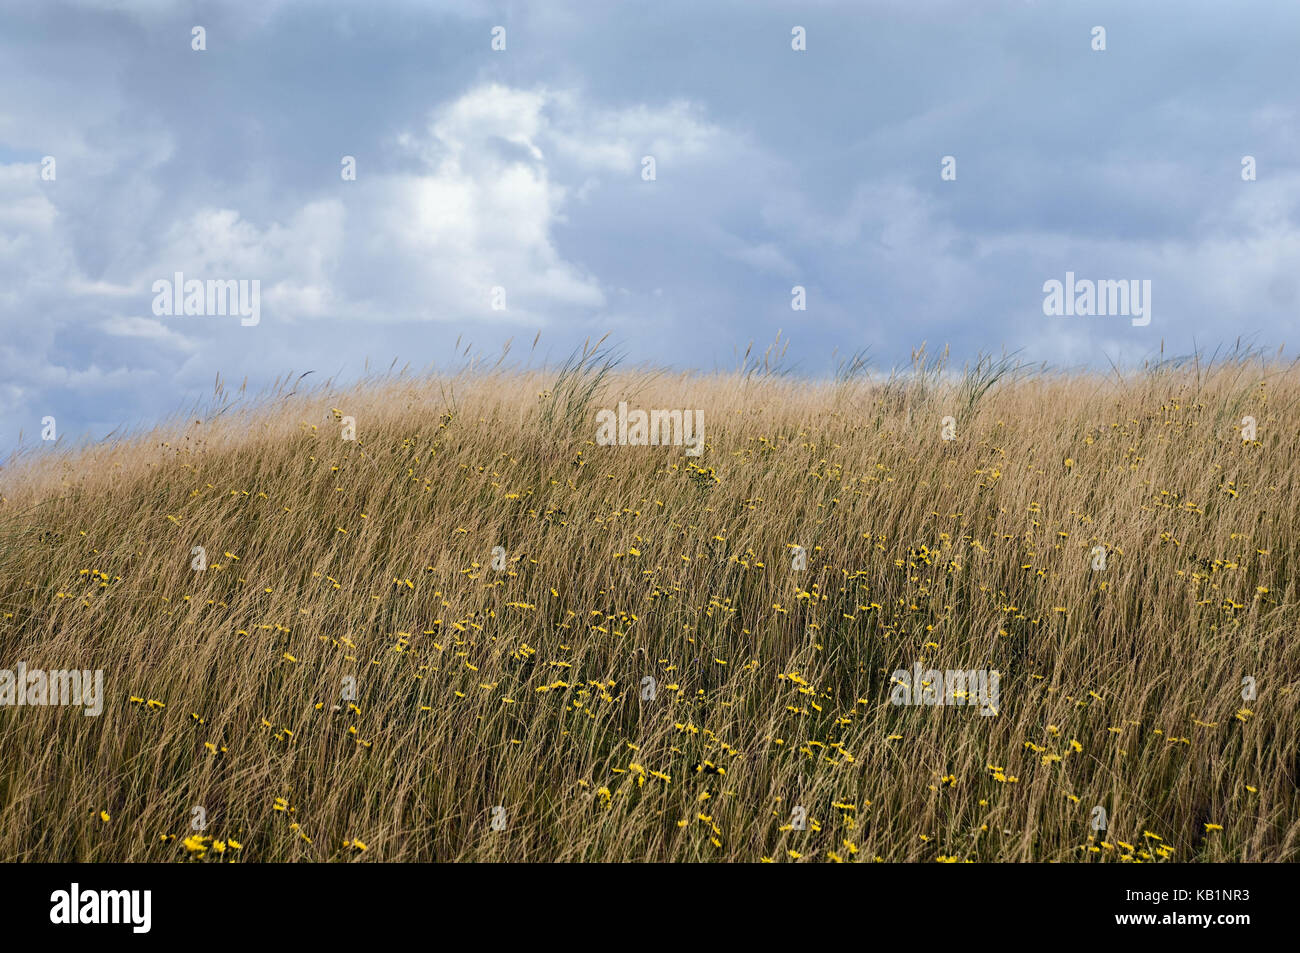 Lithuania, Nida, health resort broad bay bar, dune, grass and flowers, Stock Photo